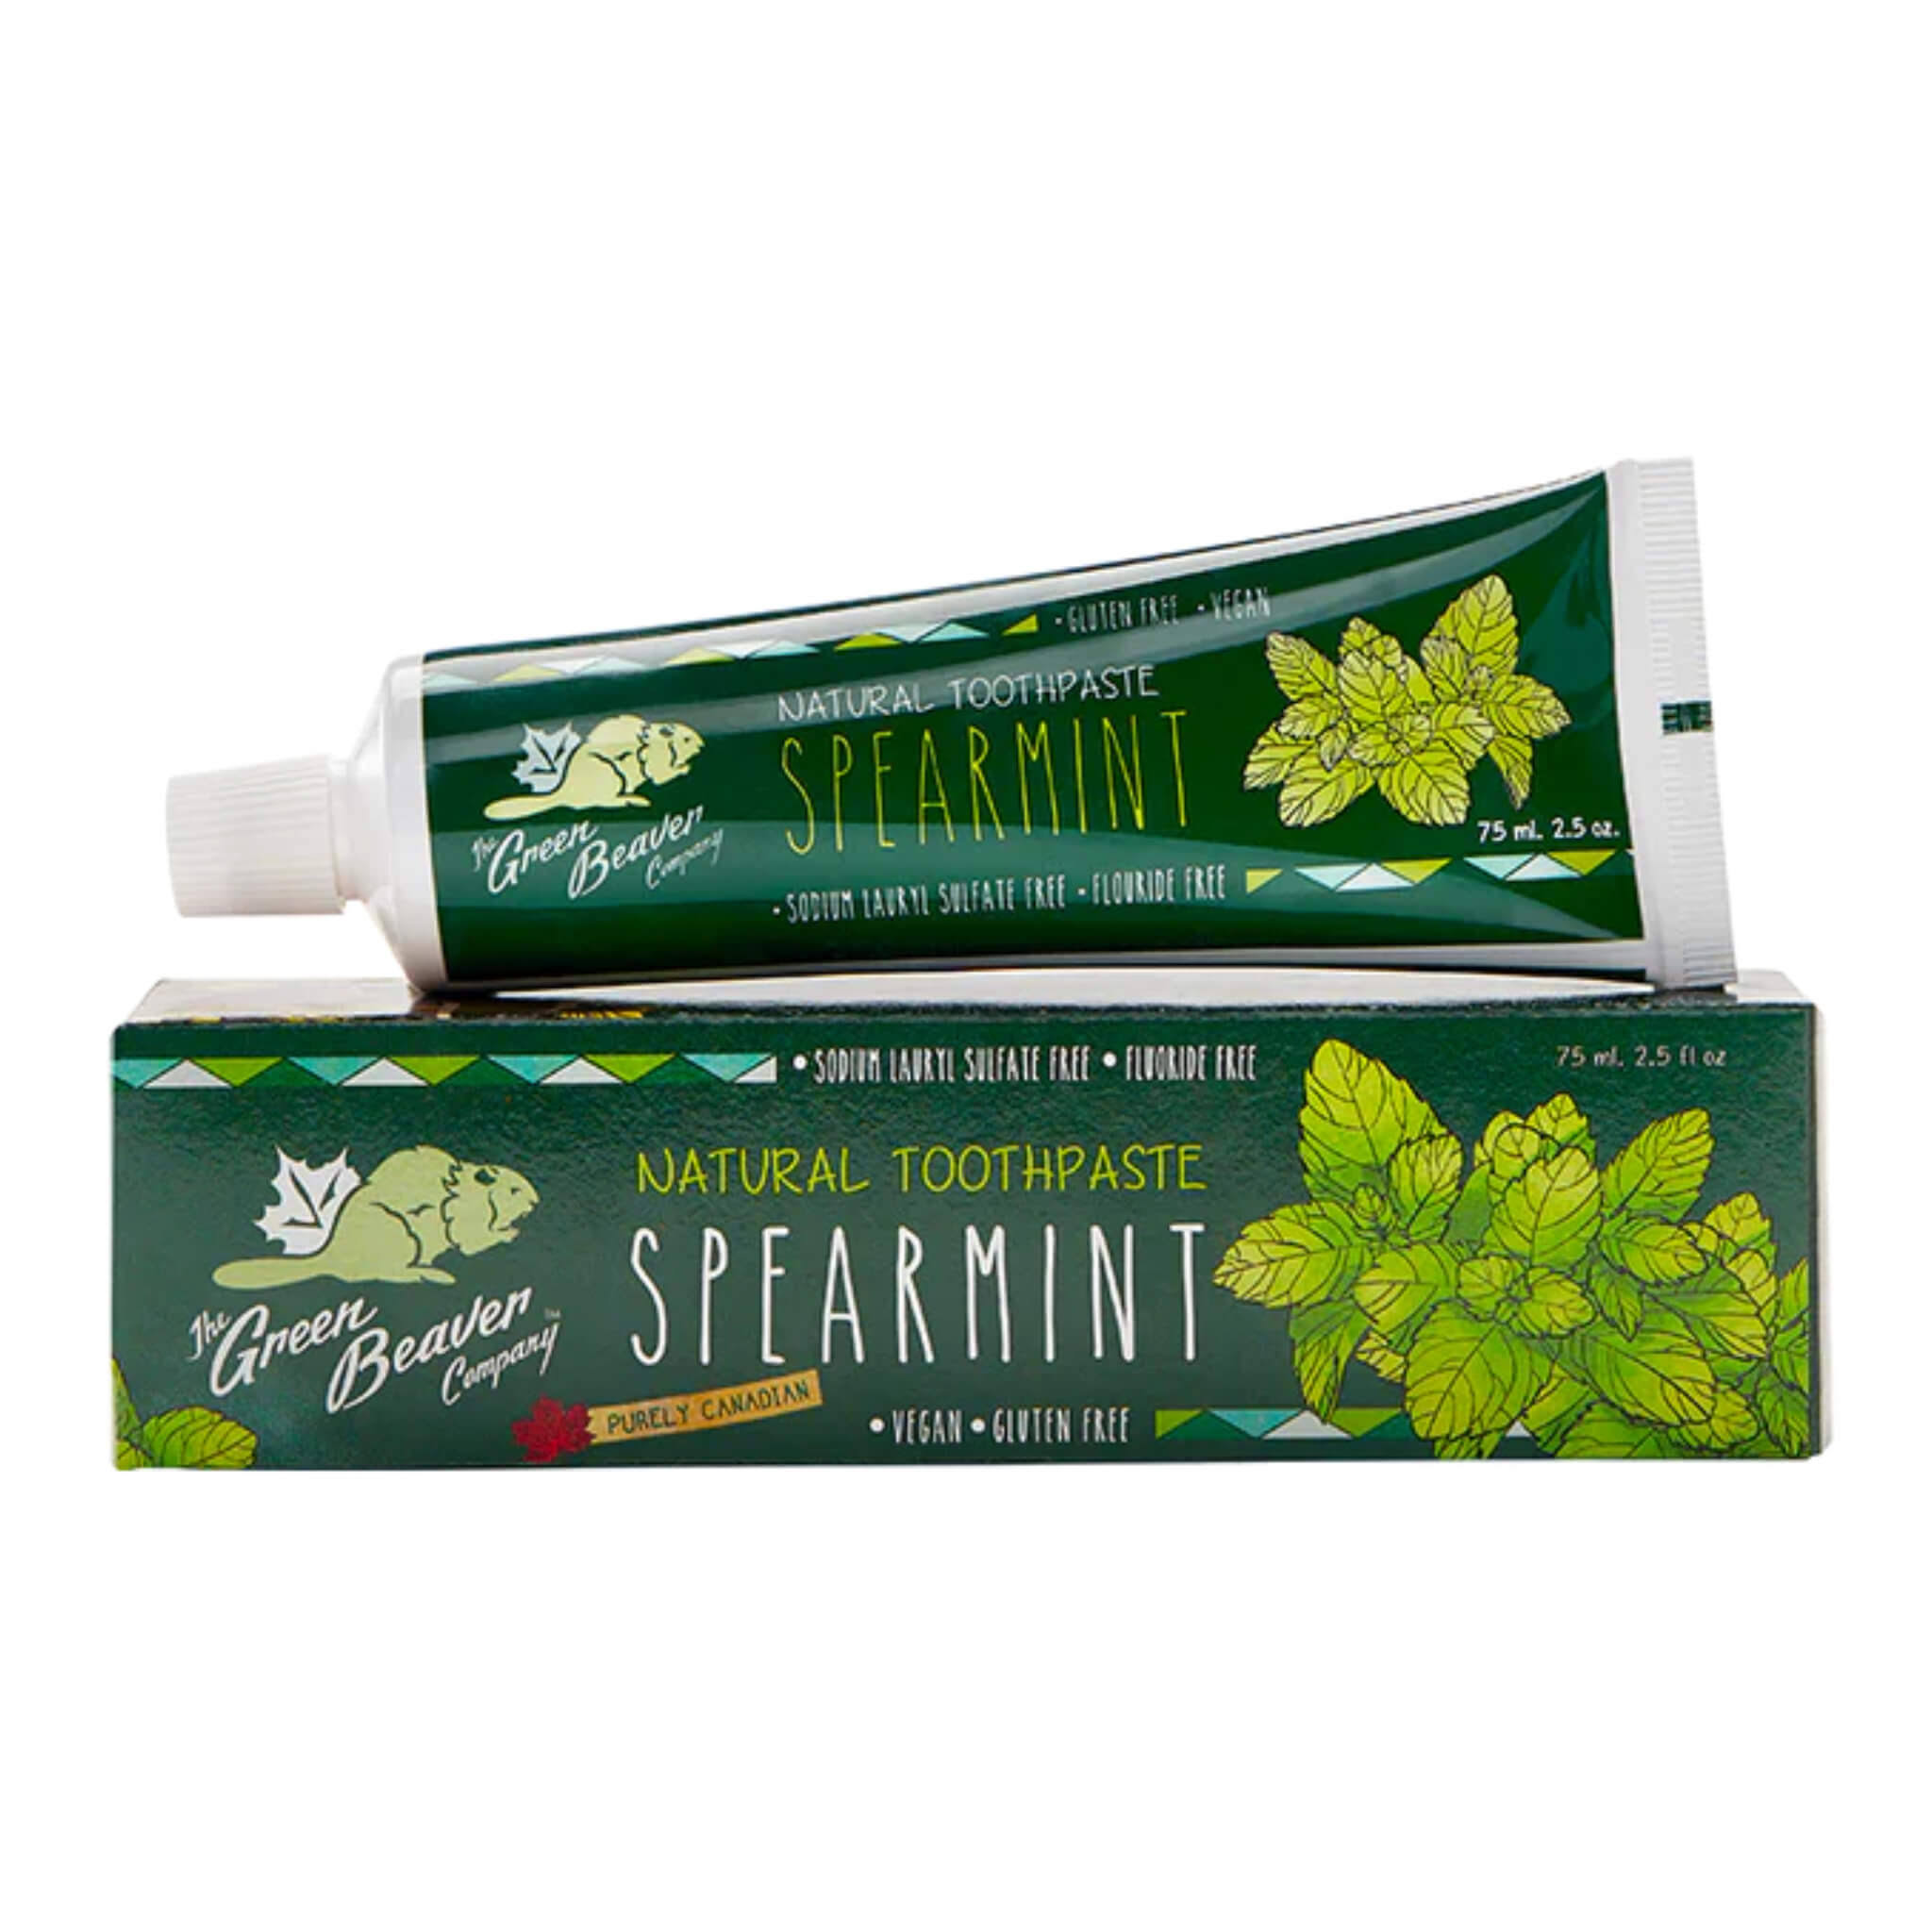 Green Beaver Spearmint Toothpaste, 2.5 fl oz